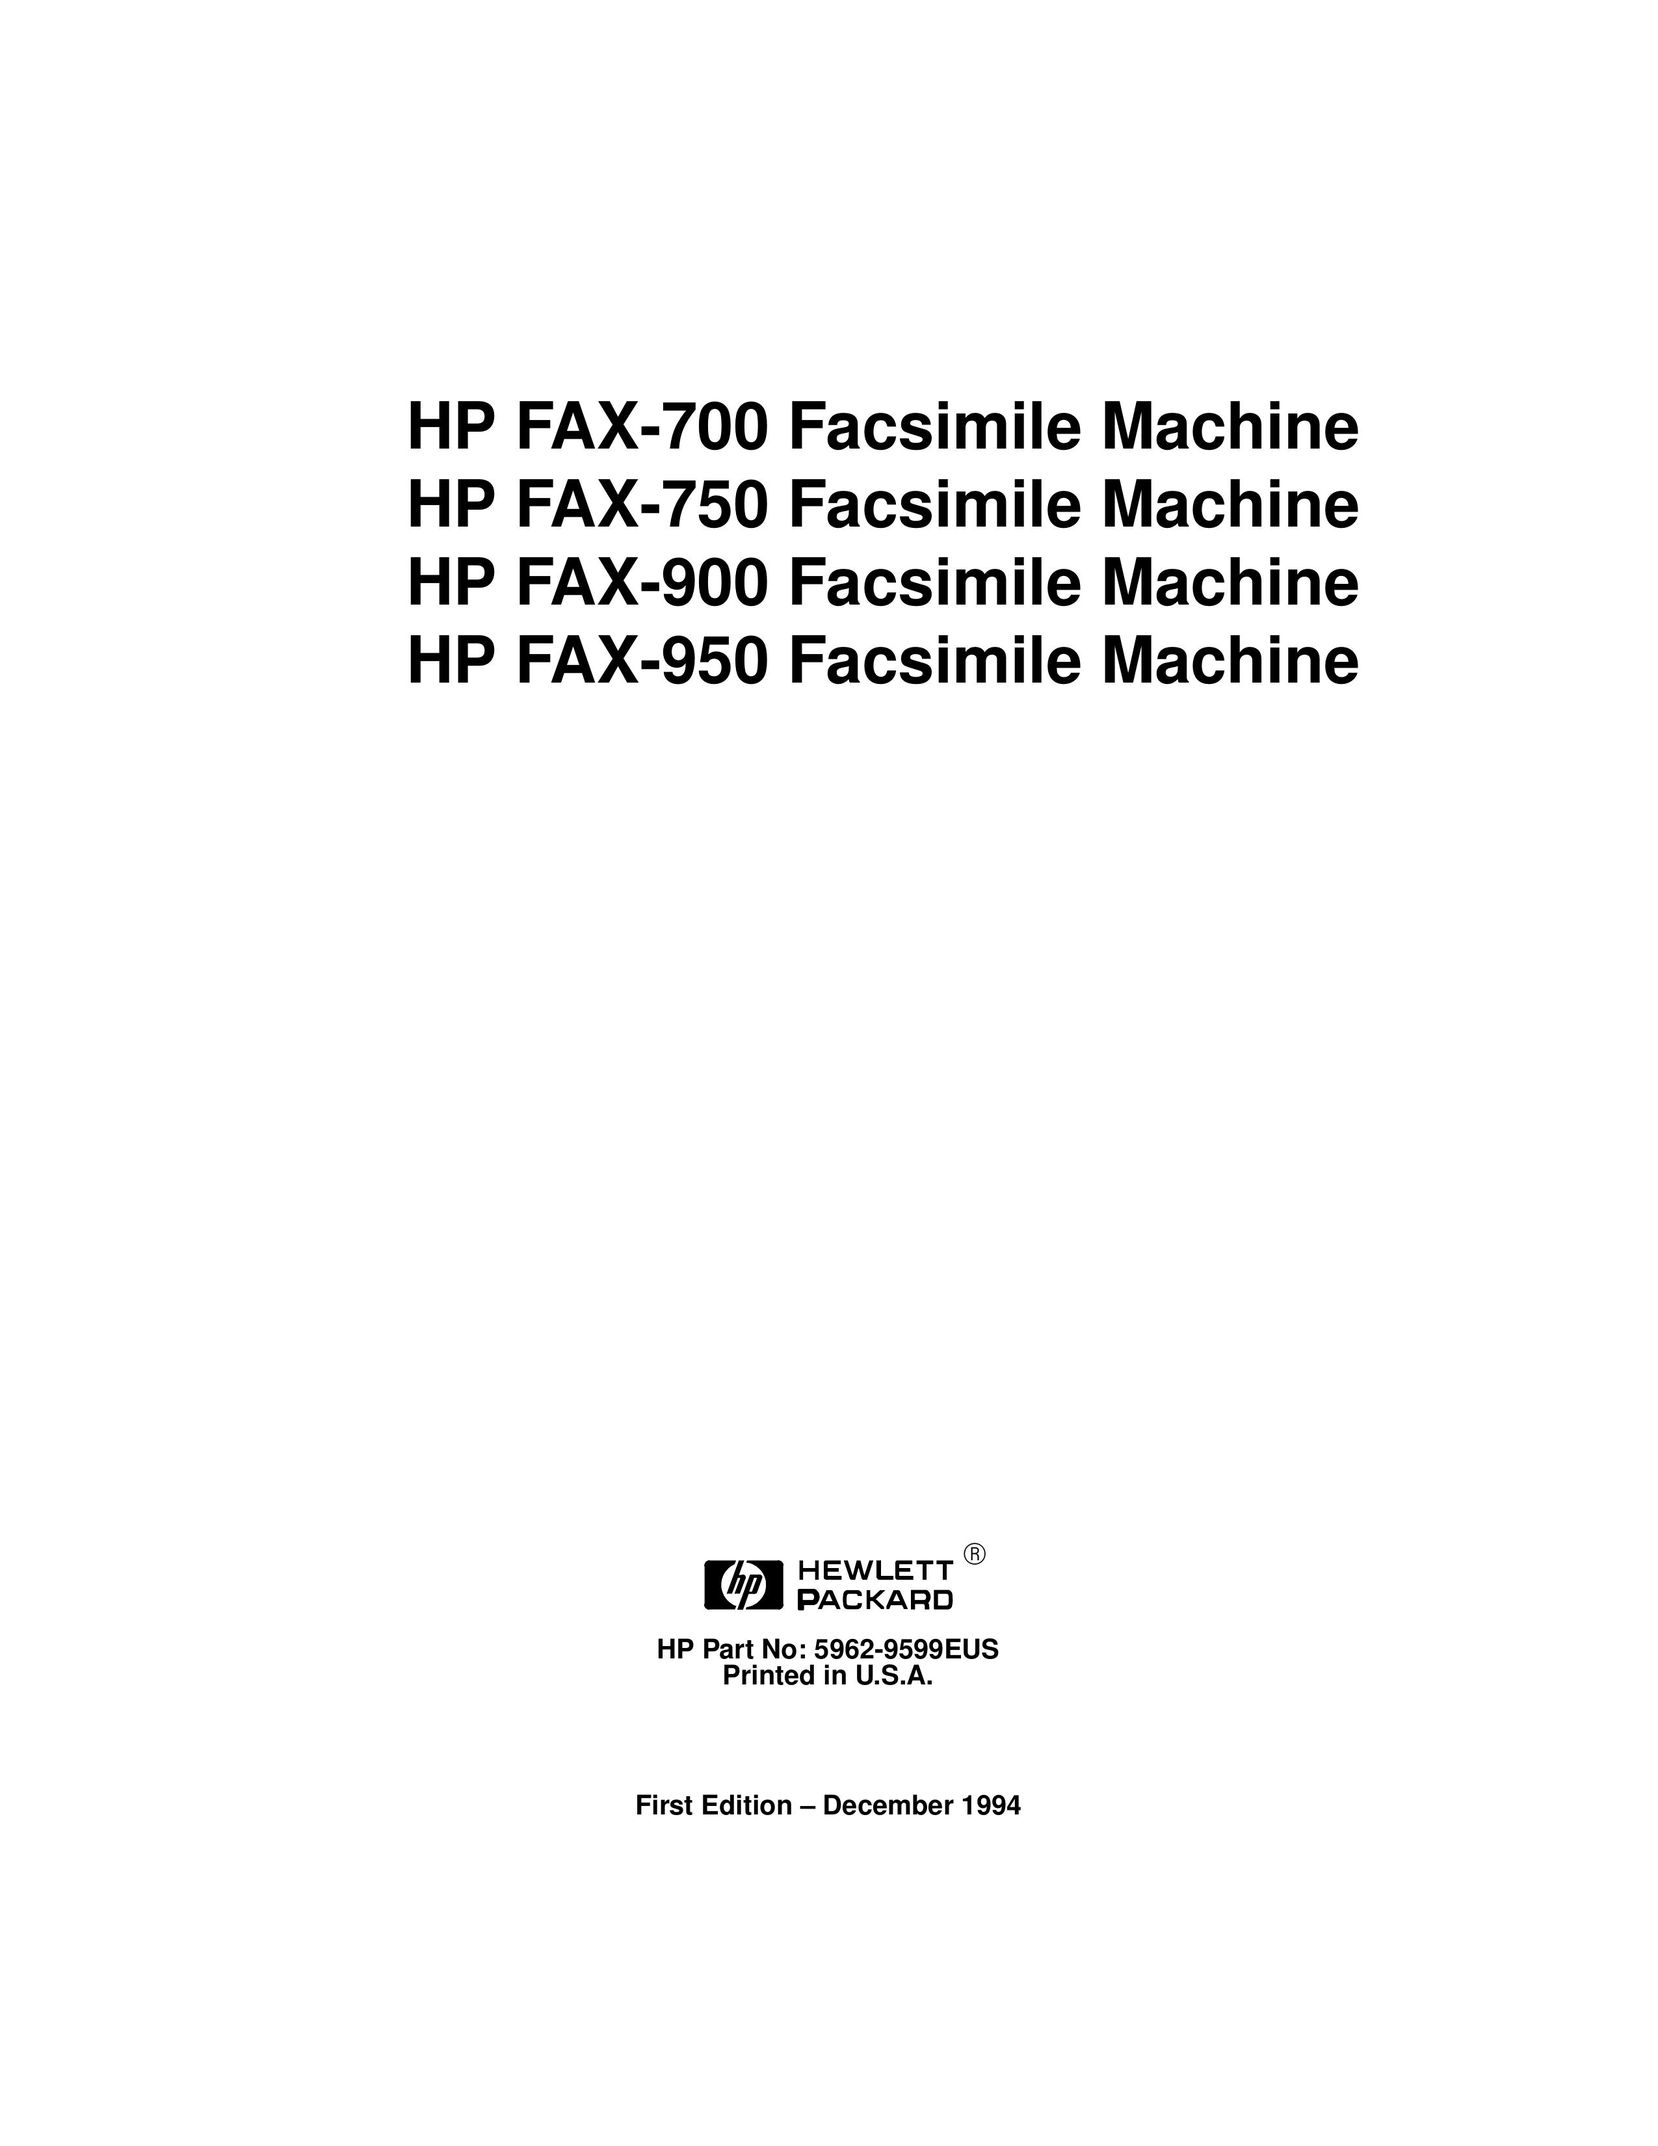 HP (Hewlett-Packard) HP FAX-900 Fax Machine User Manual